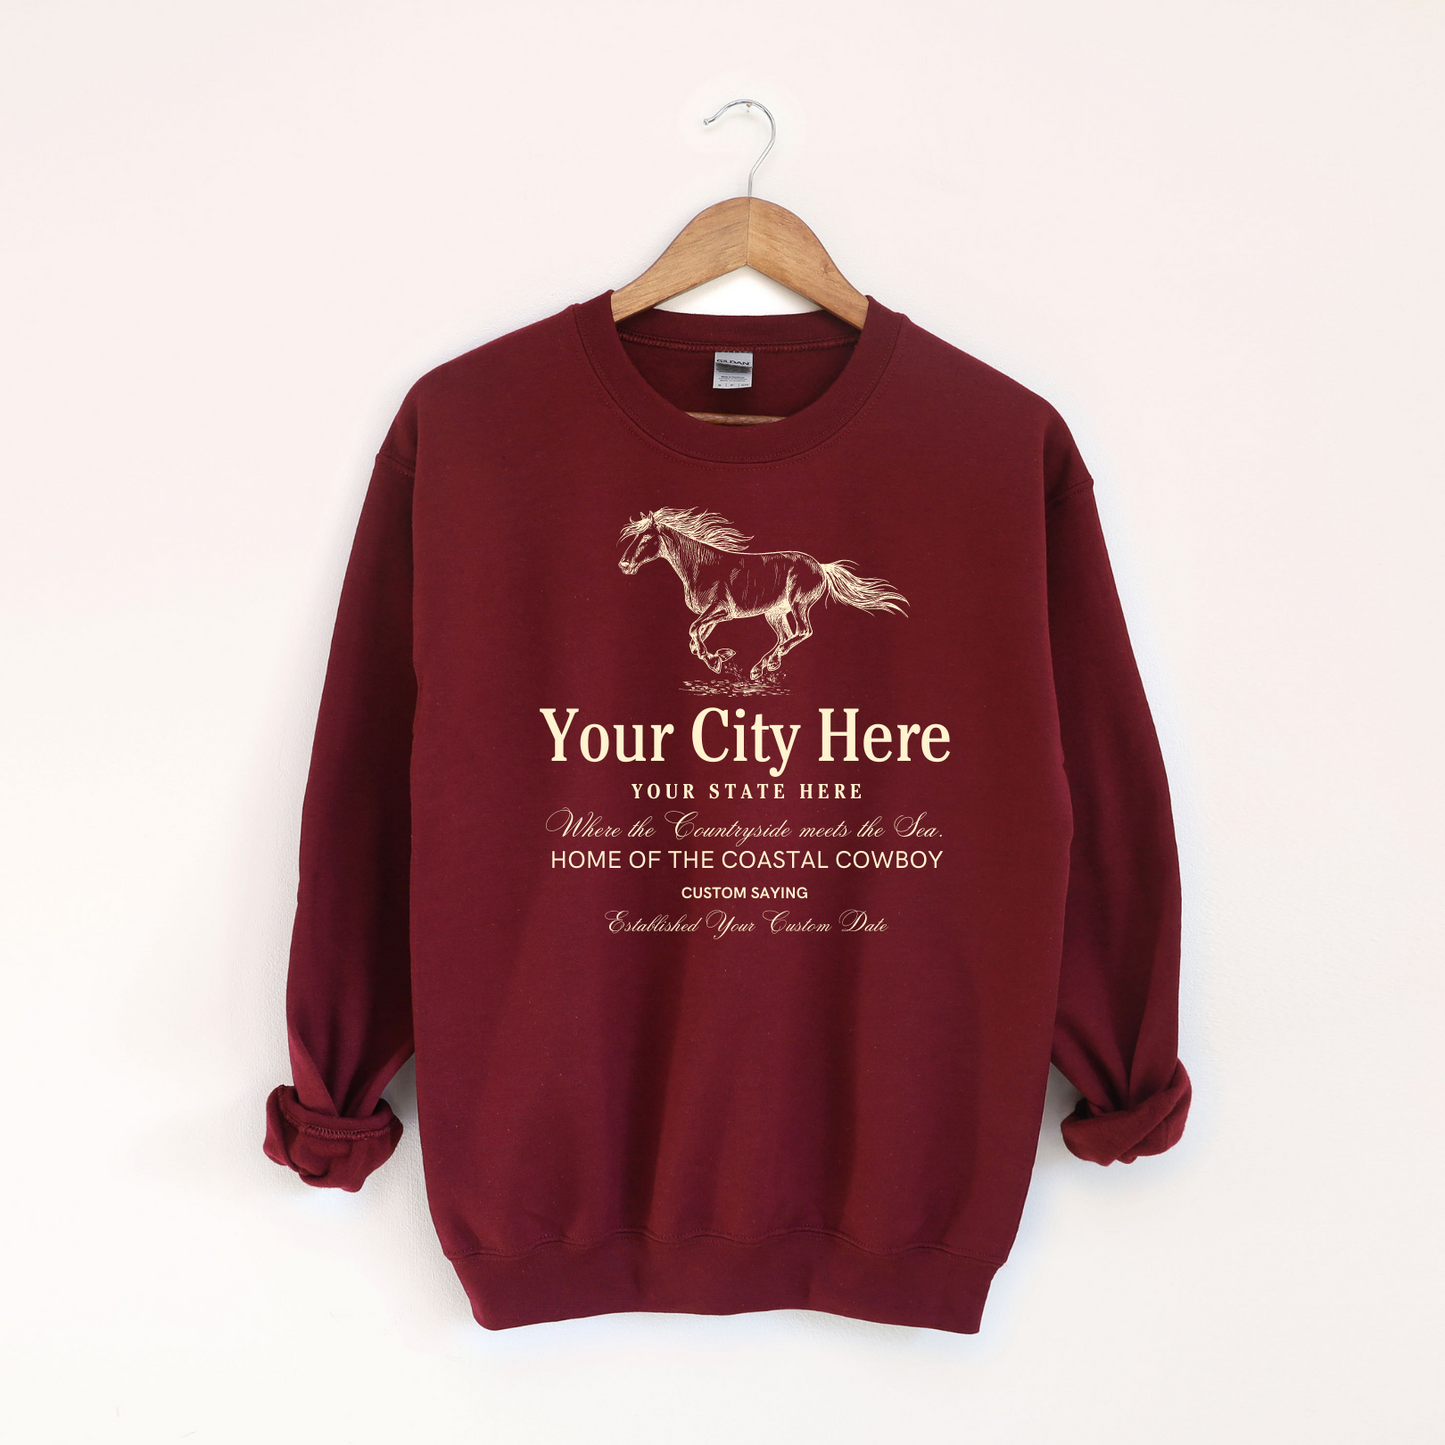 Coastal Cowboy Sweatshirt - Customize With Your City